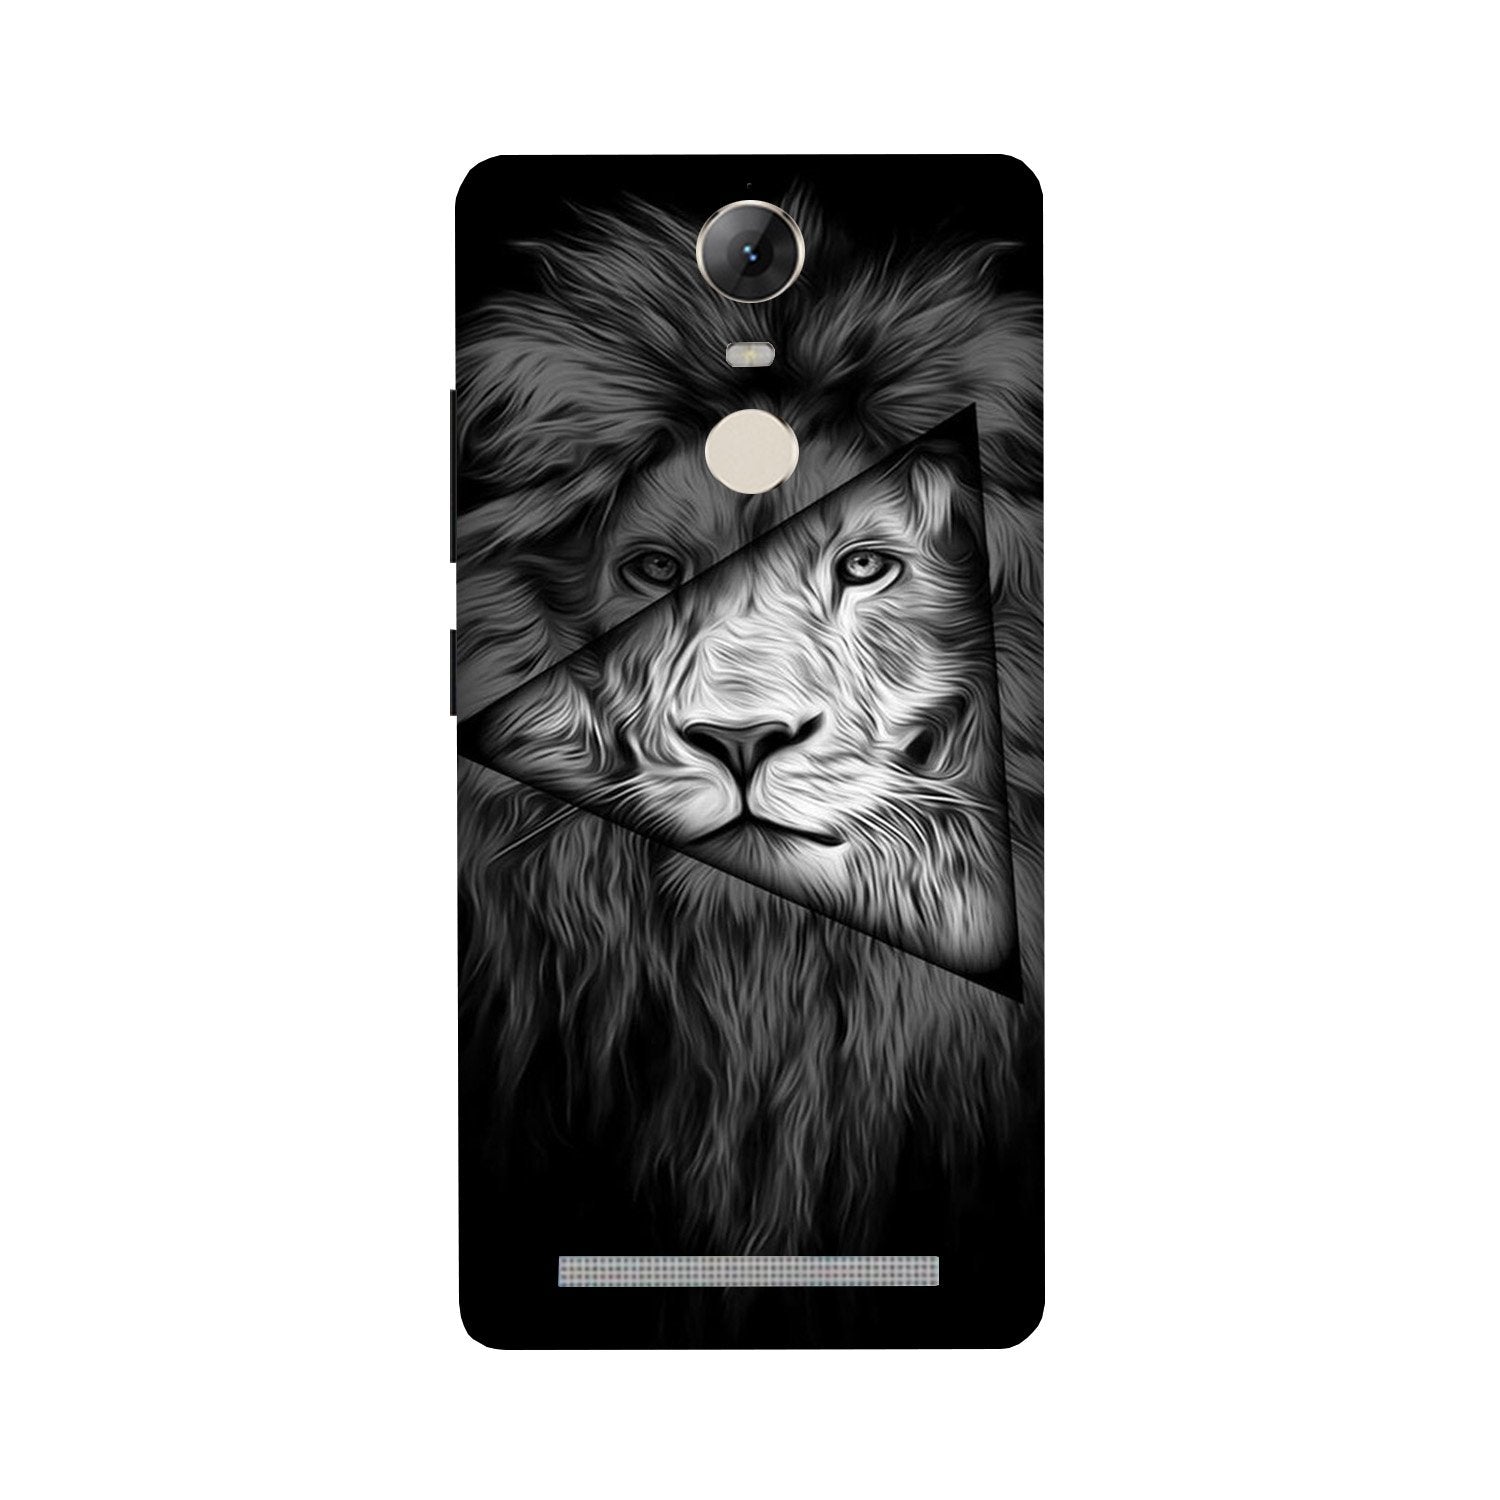 Lion Star Case for Lenovo Vibe K5 Note (Design No. 226)